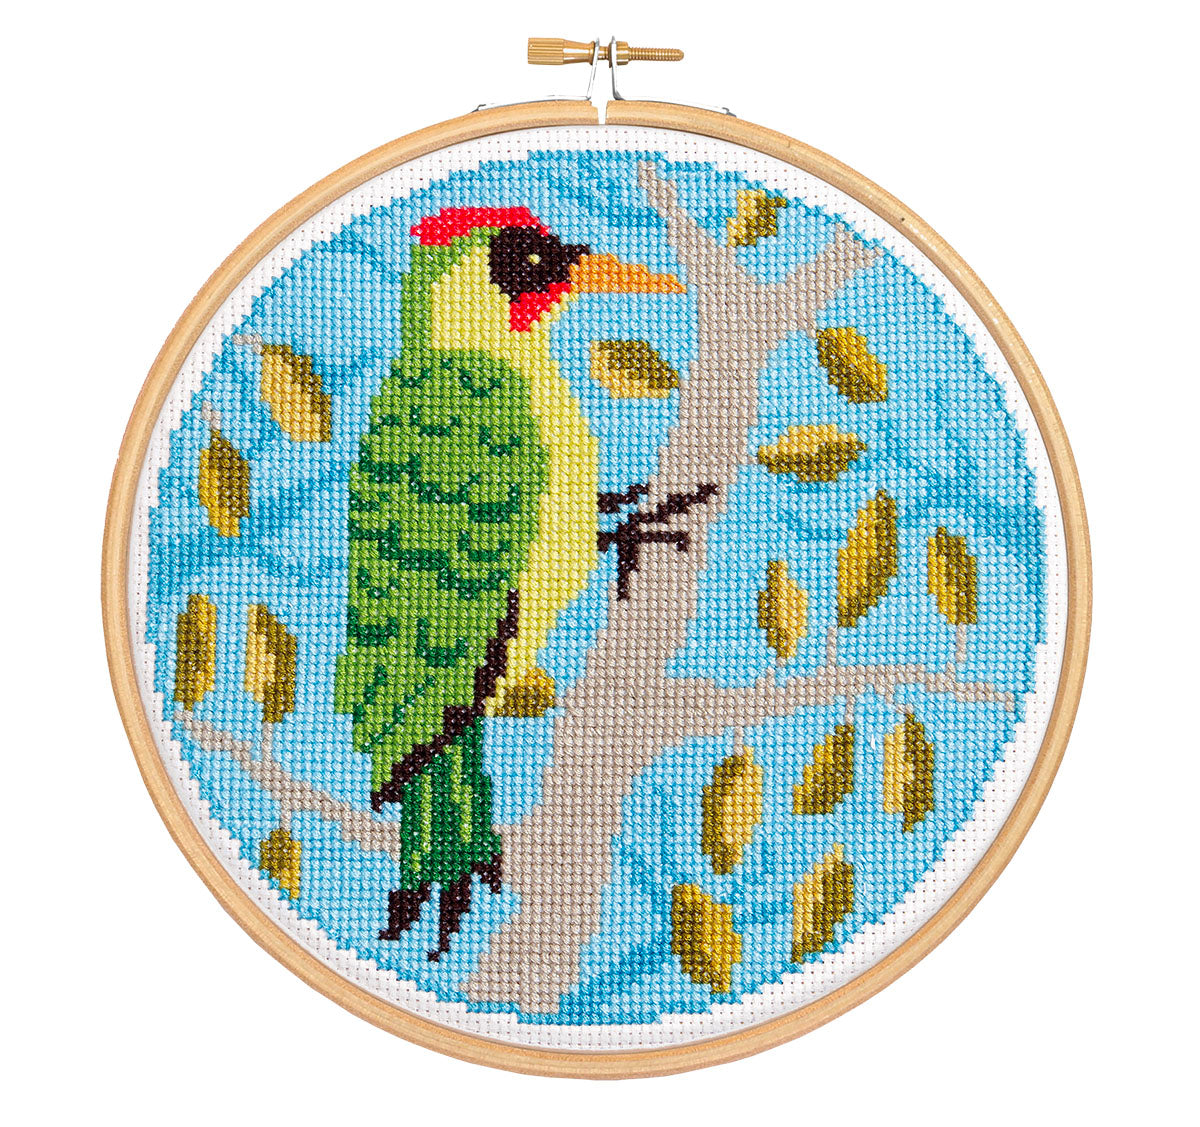 Rainbow Finch Cross Stitch Kit - Stitched Modern